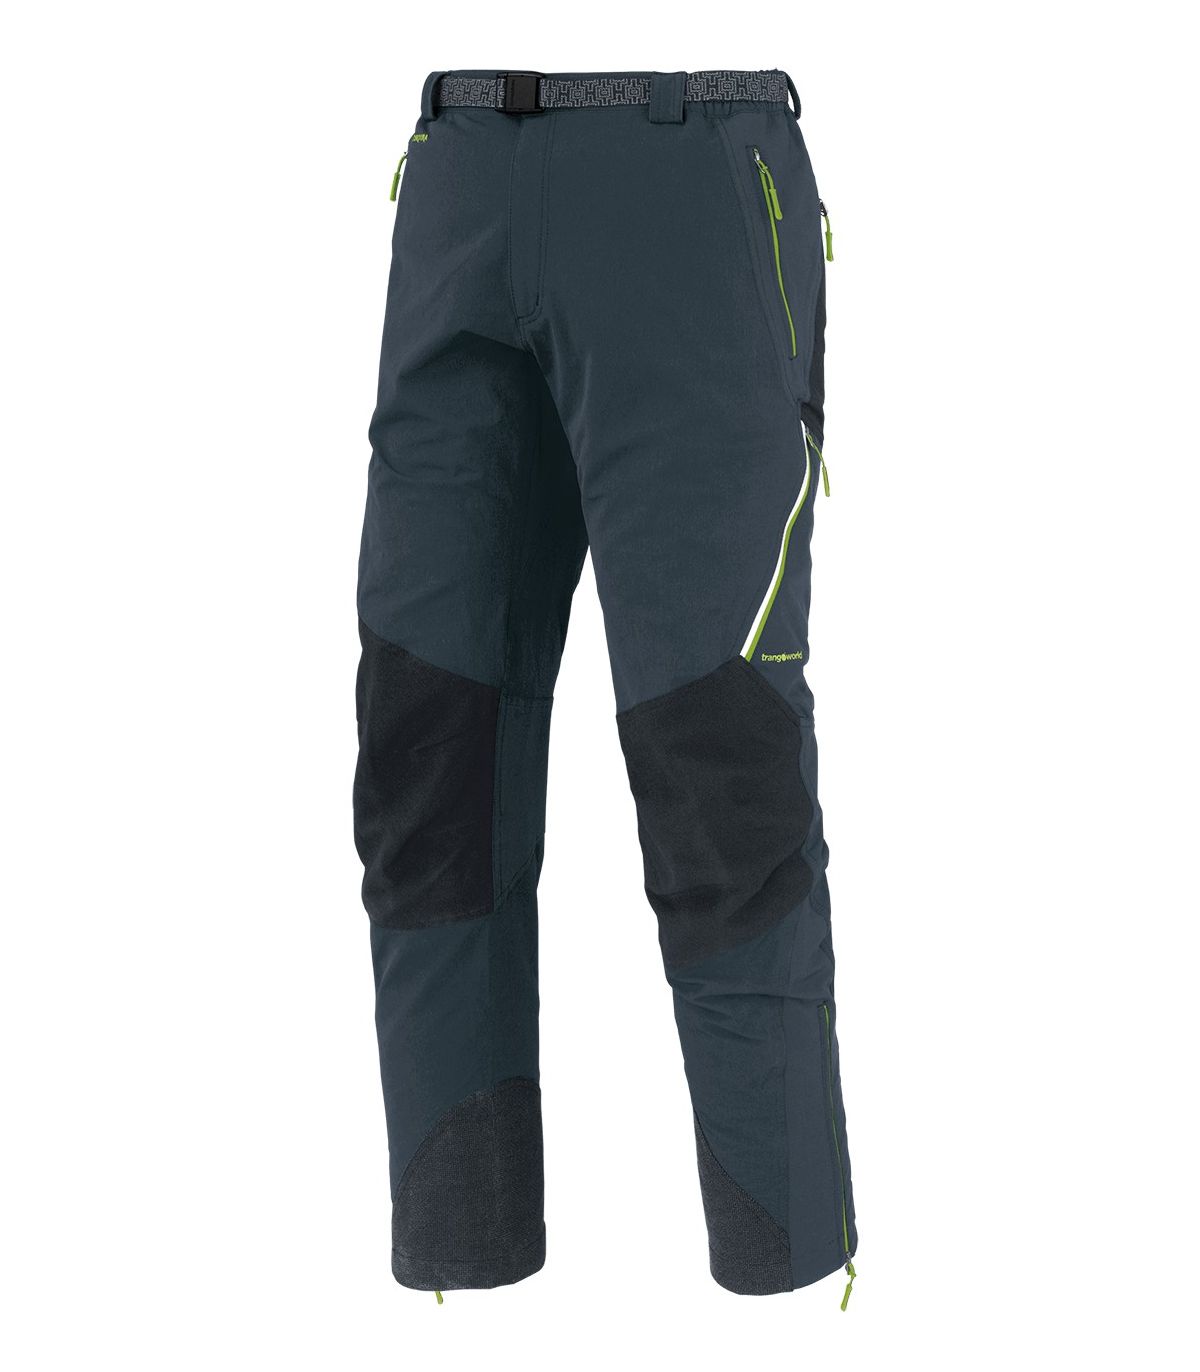 Nuevos colores de pantalones de montaña TrangoWorld Prote Fi para hombre